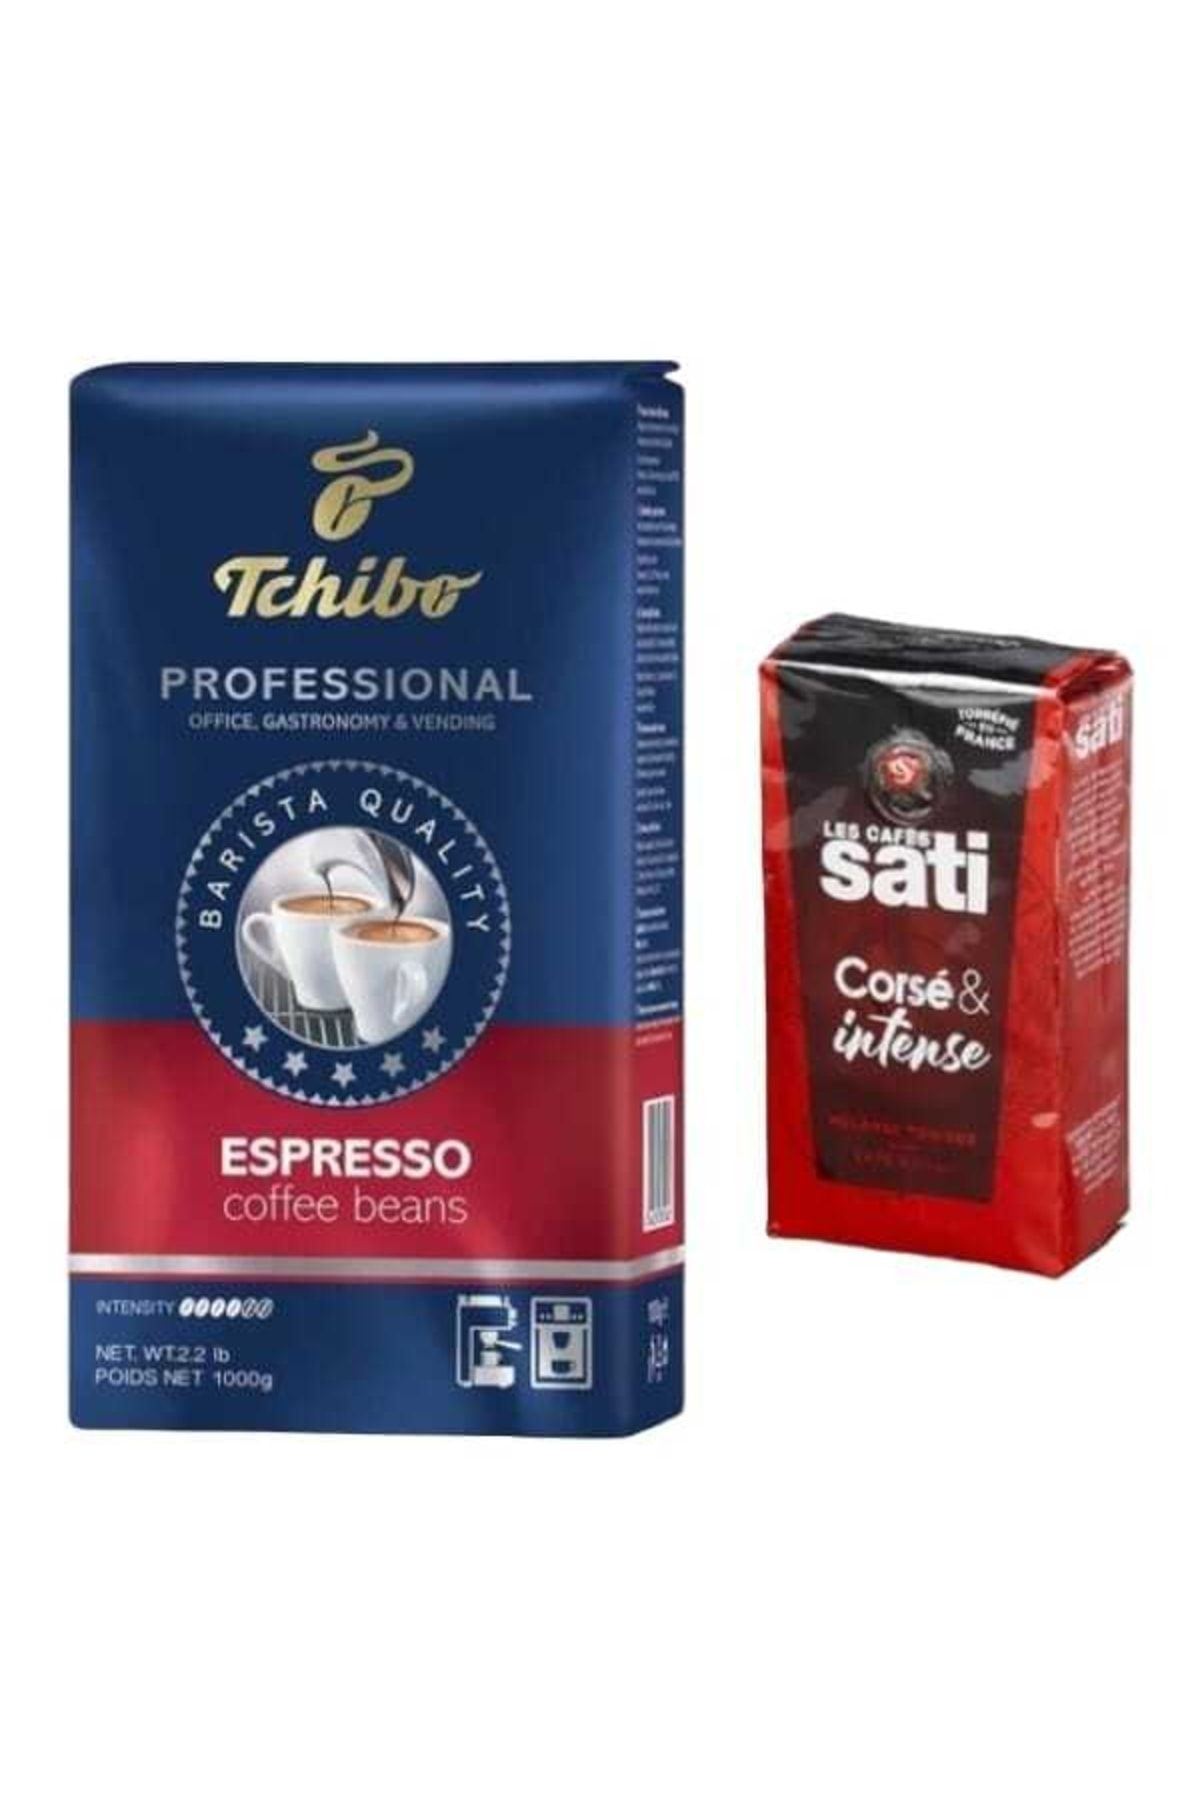 Tchibo Profesional Espresso Çekirdek Kahve 1kg+les Cafes Sati Corsé & Intense 250gr